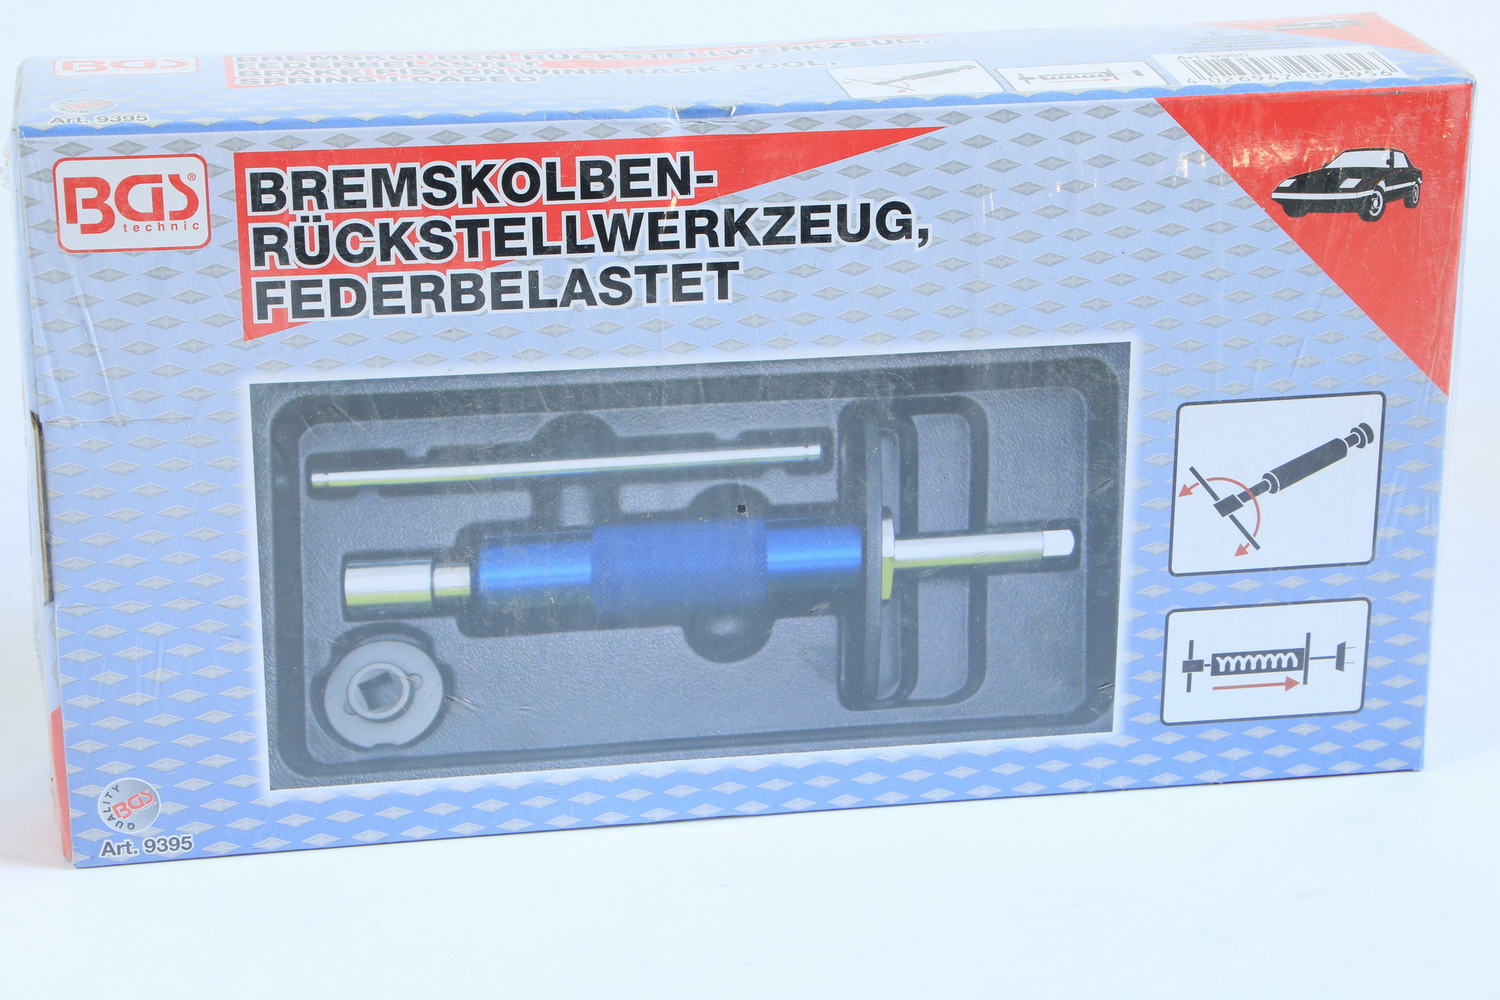 https://trustkai.de/images/product_images/original_images/bgs-bremskolben-ruckstellwerkzeug-federbelastet-bremssattel-rucksteller-9395-1.jpg